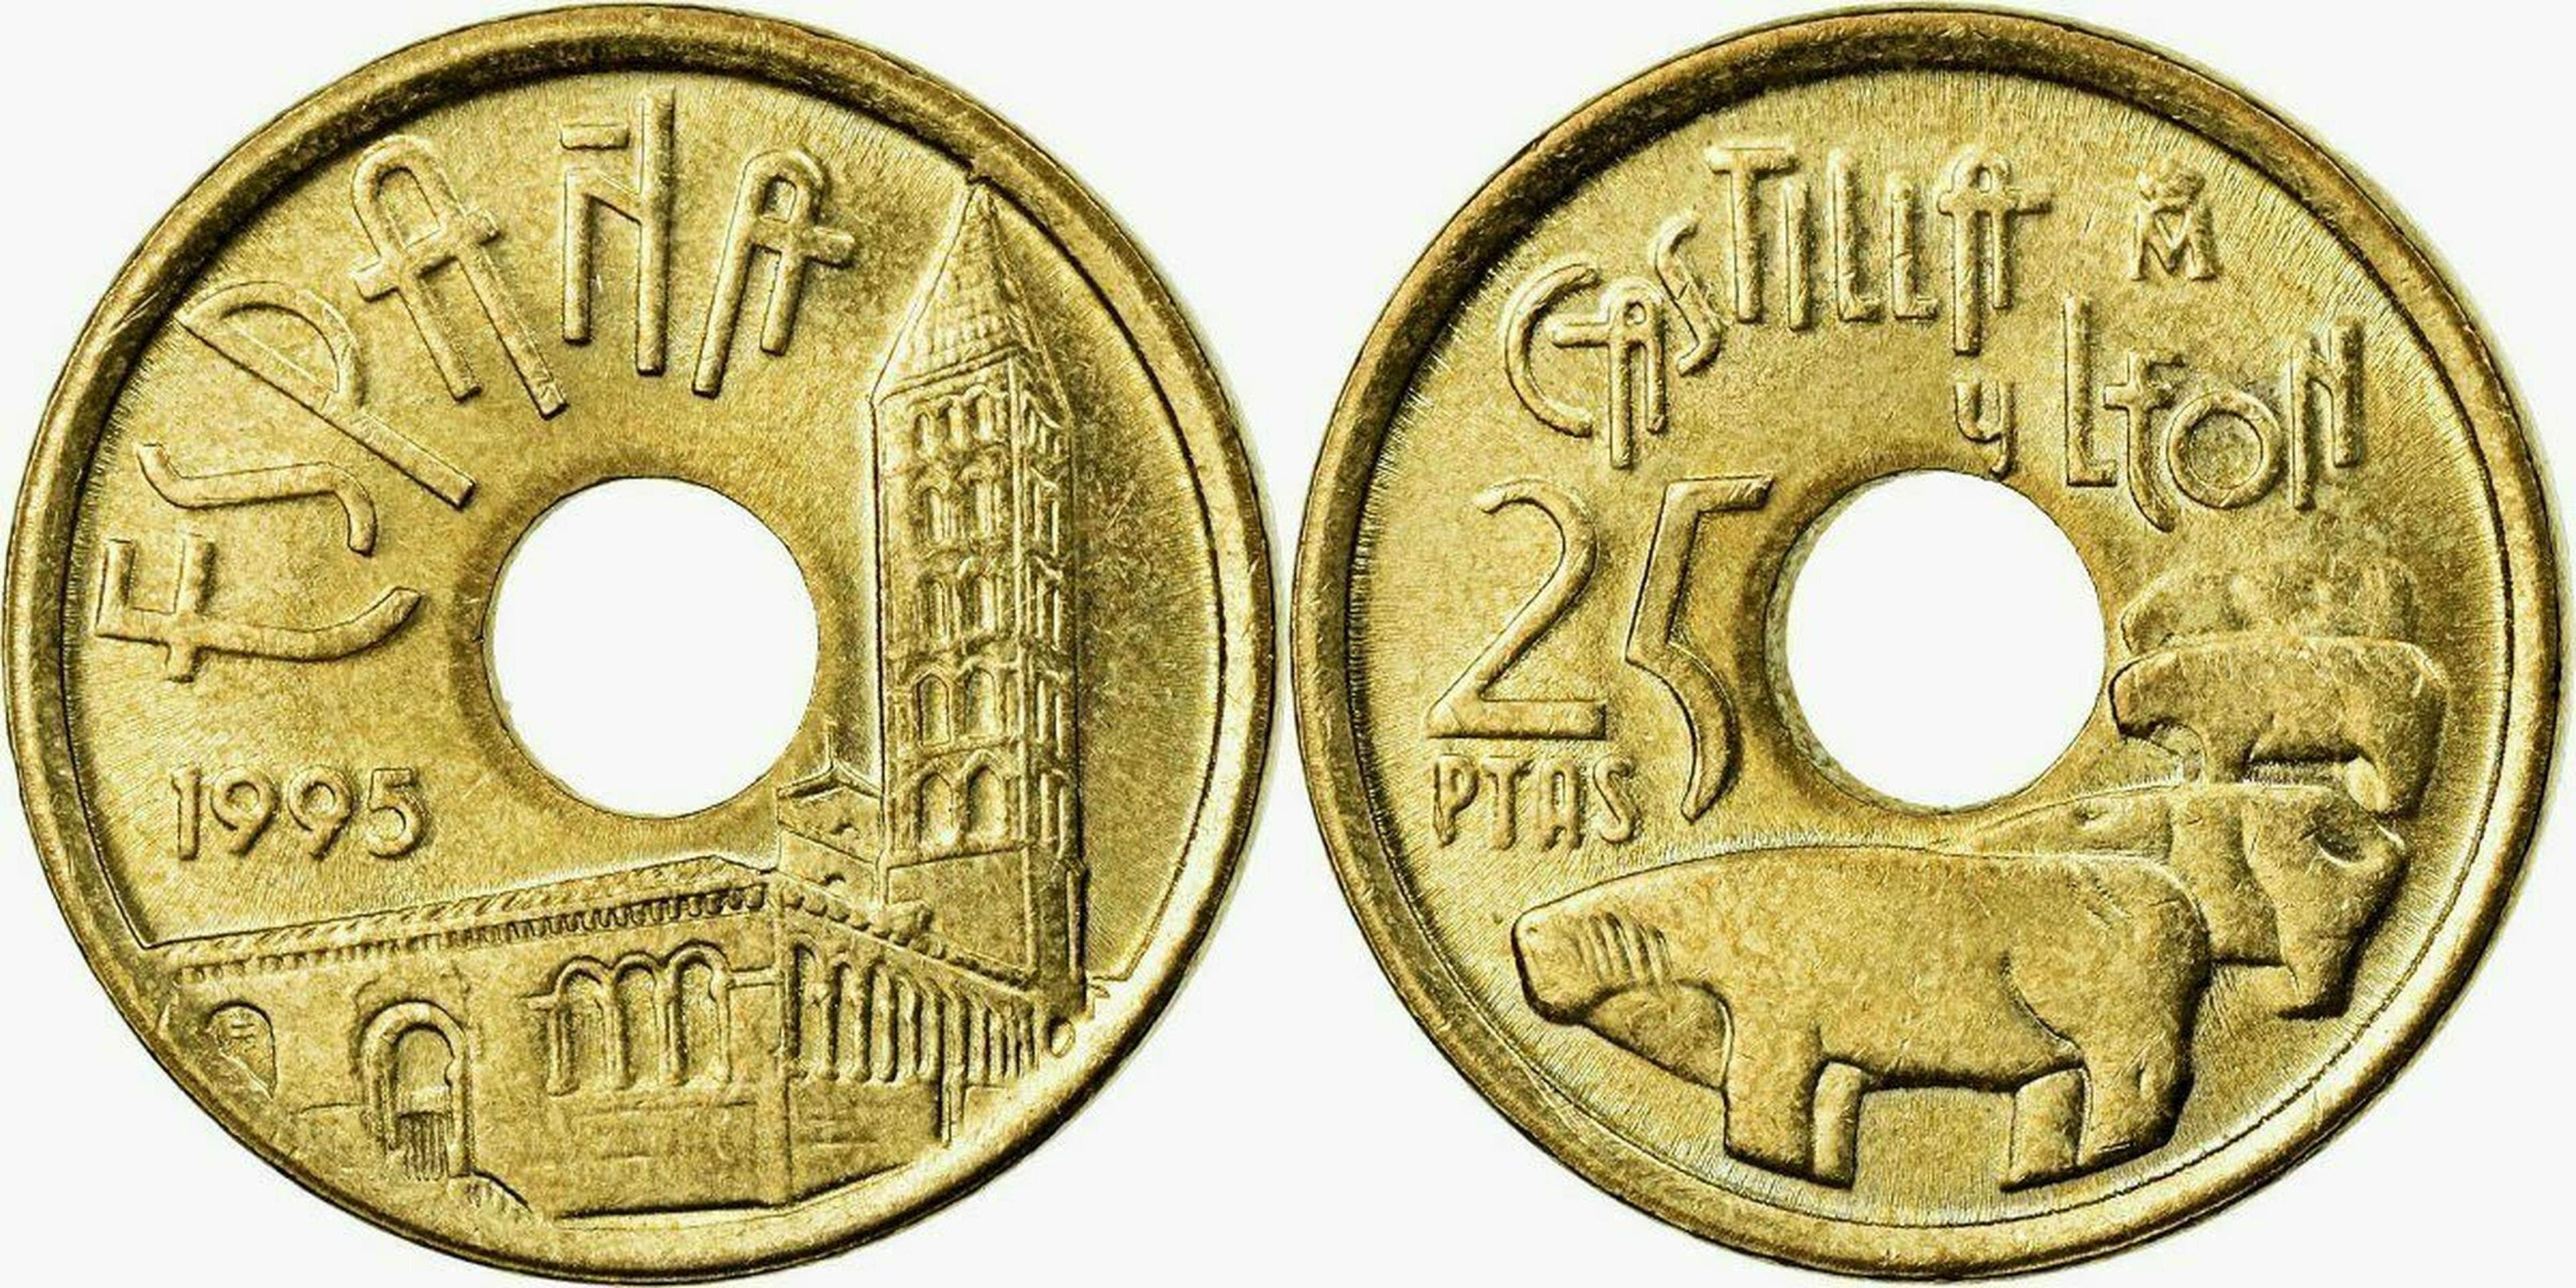 25 pesetas de 1995